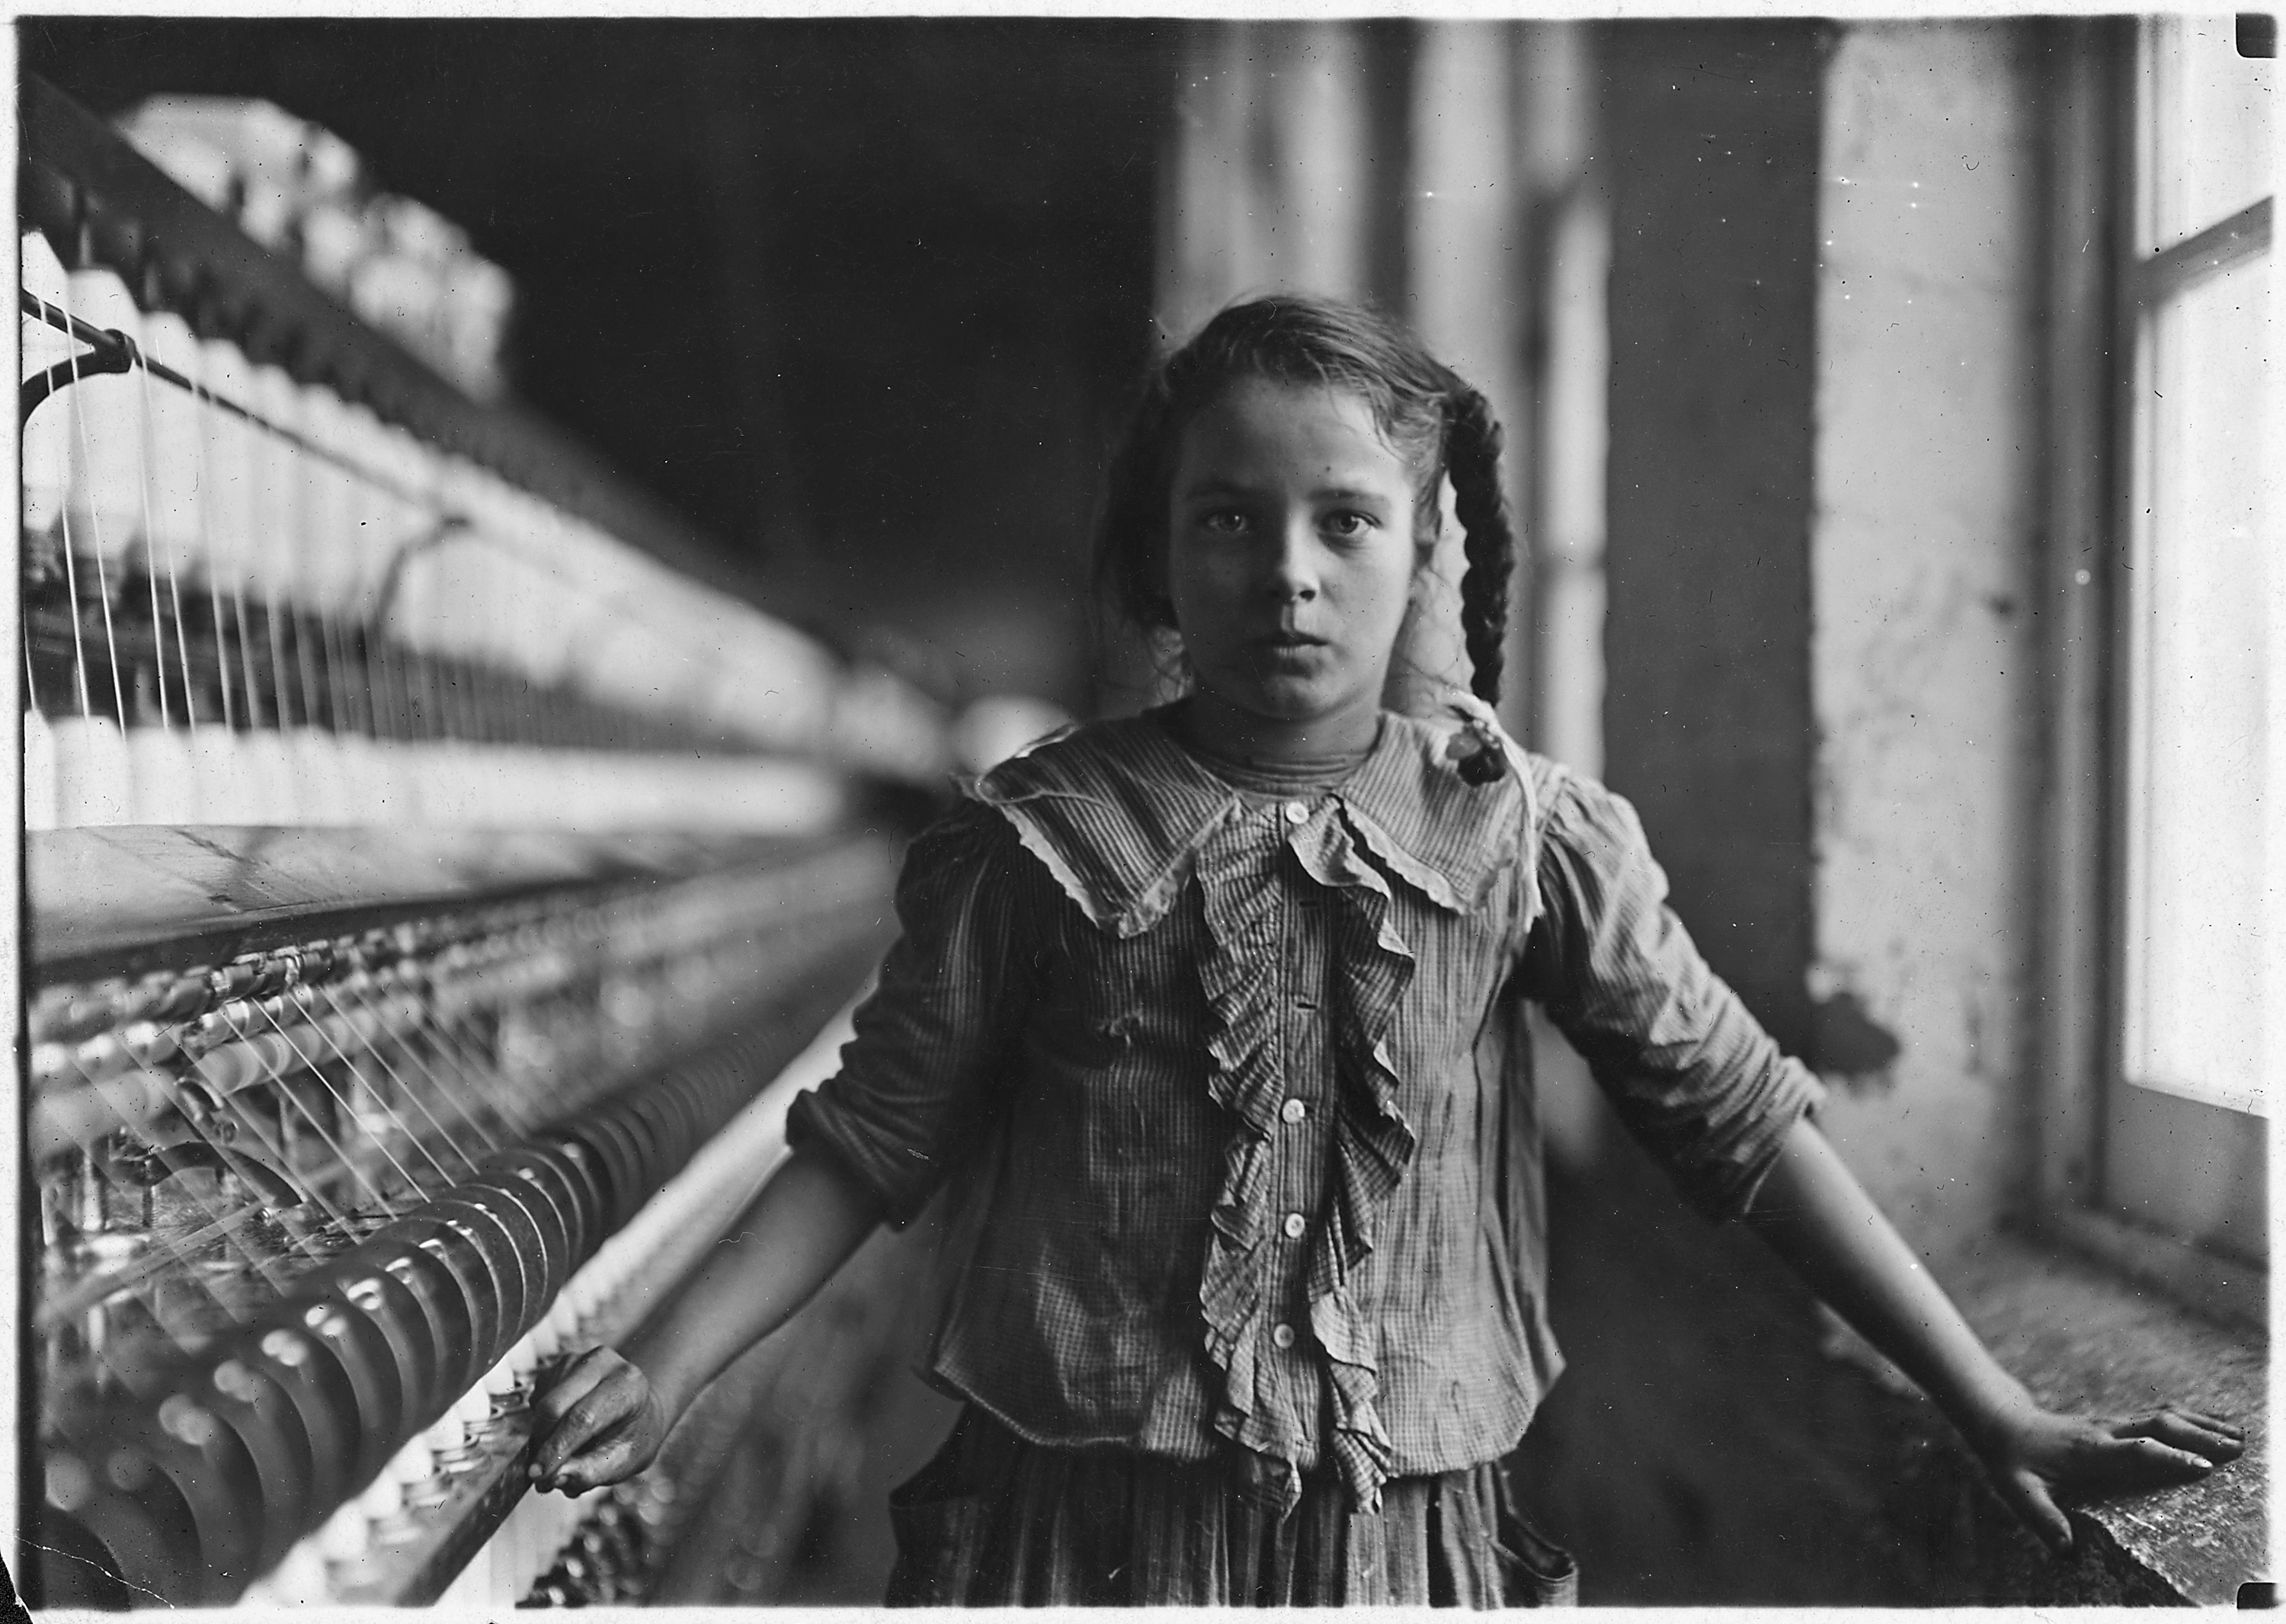 child labor 1900s essay